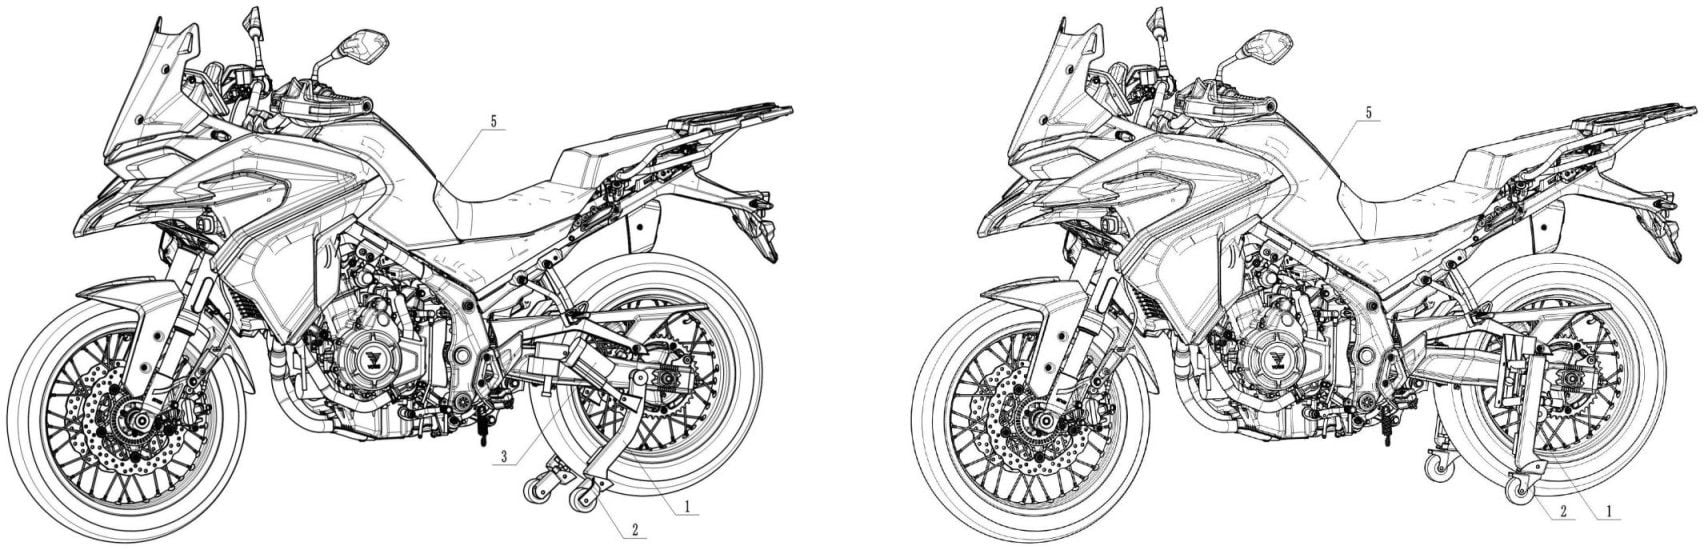 Voge註冊了兩種不同形式的後搖臂輔助輪設計